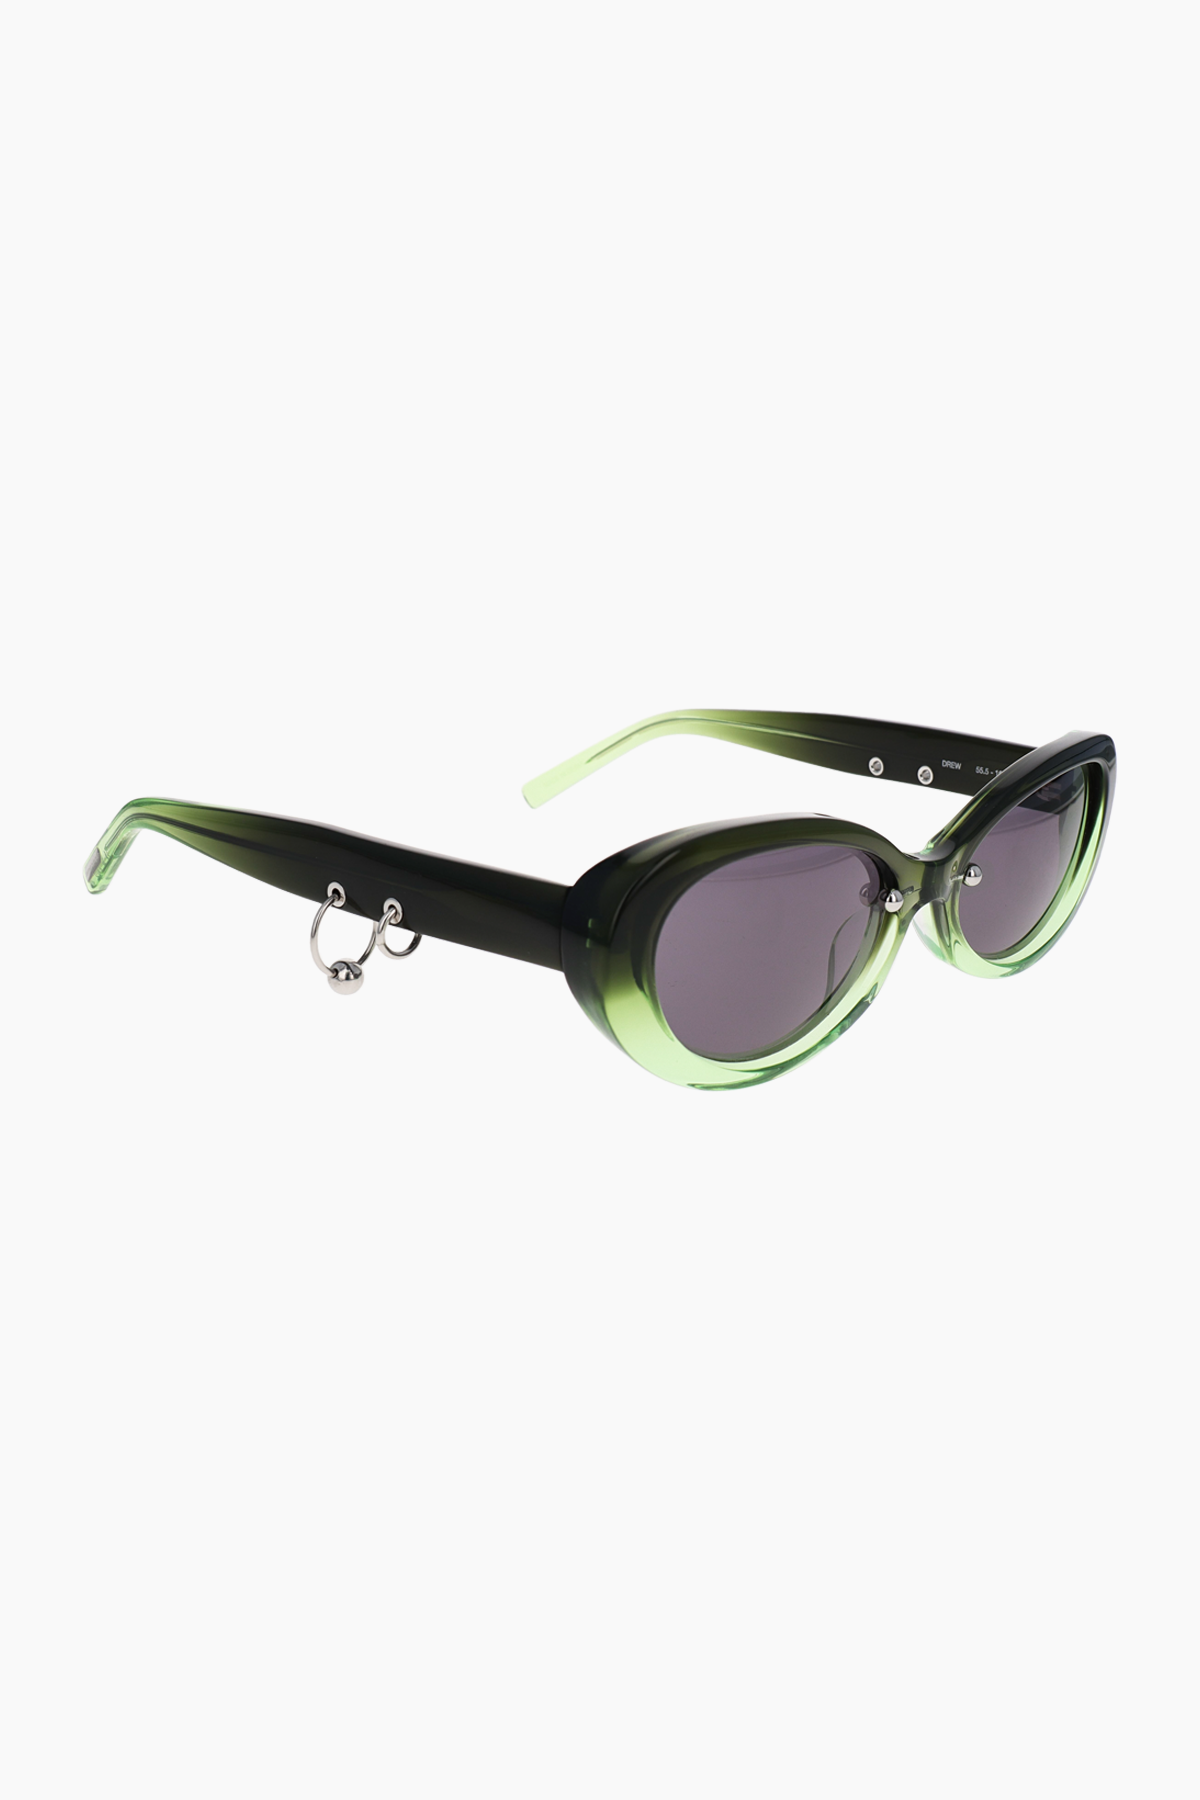 Drew green sunglasses